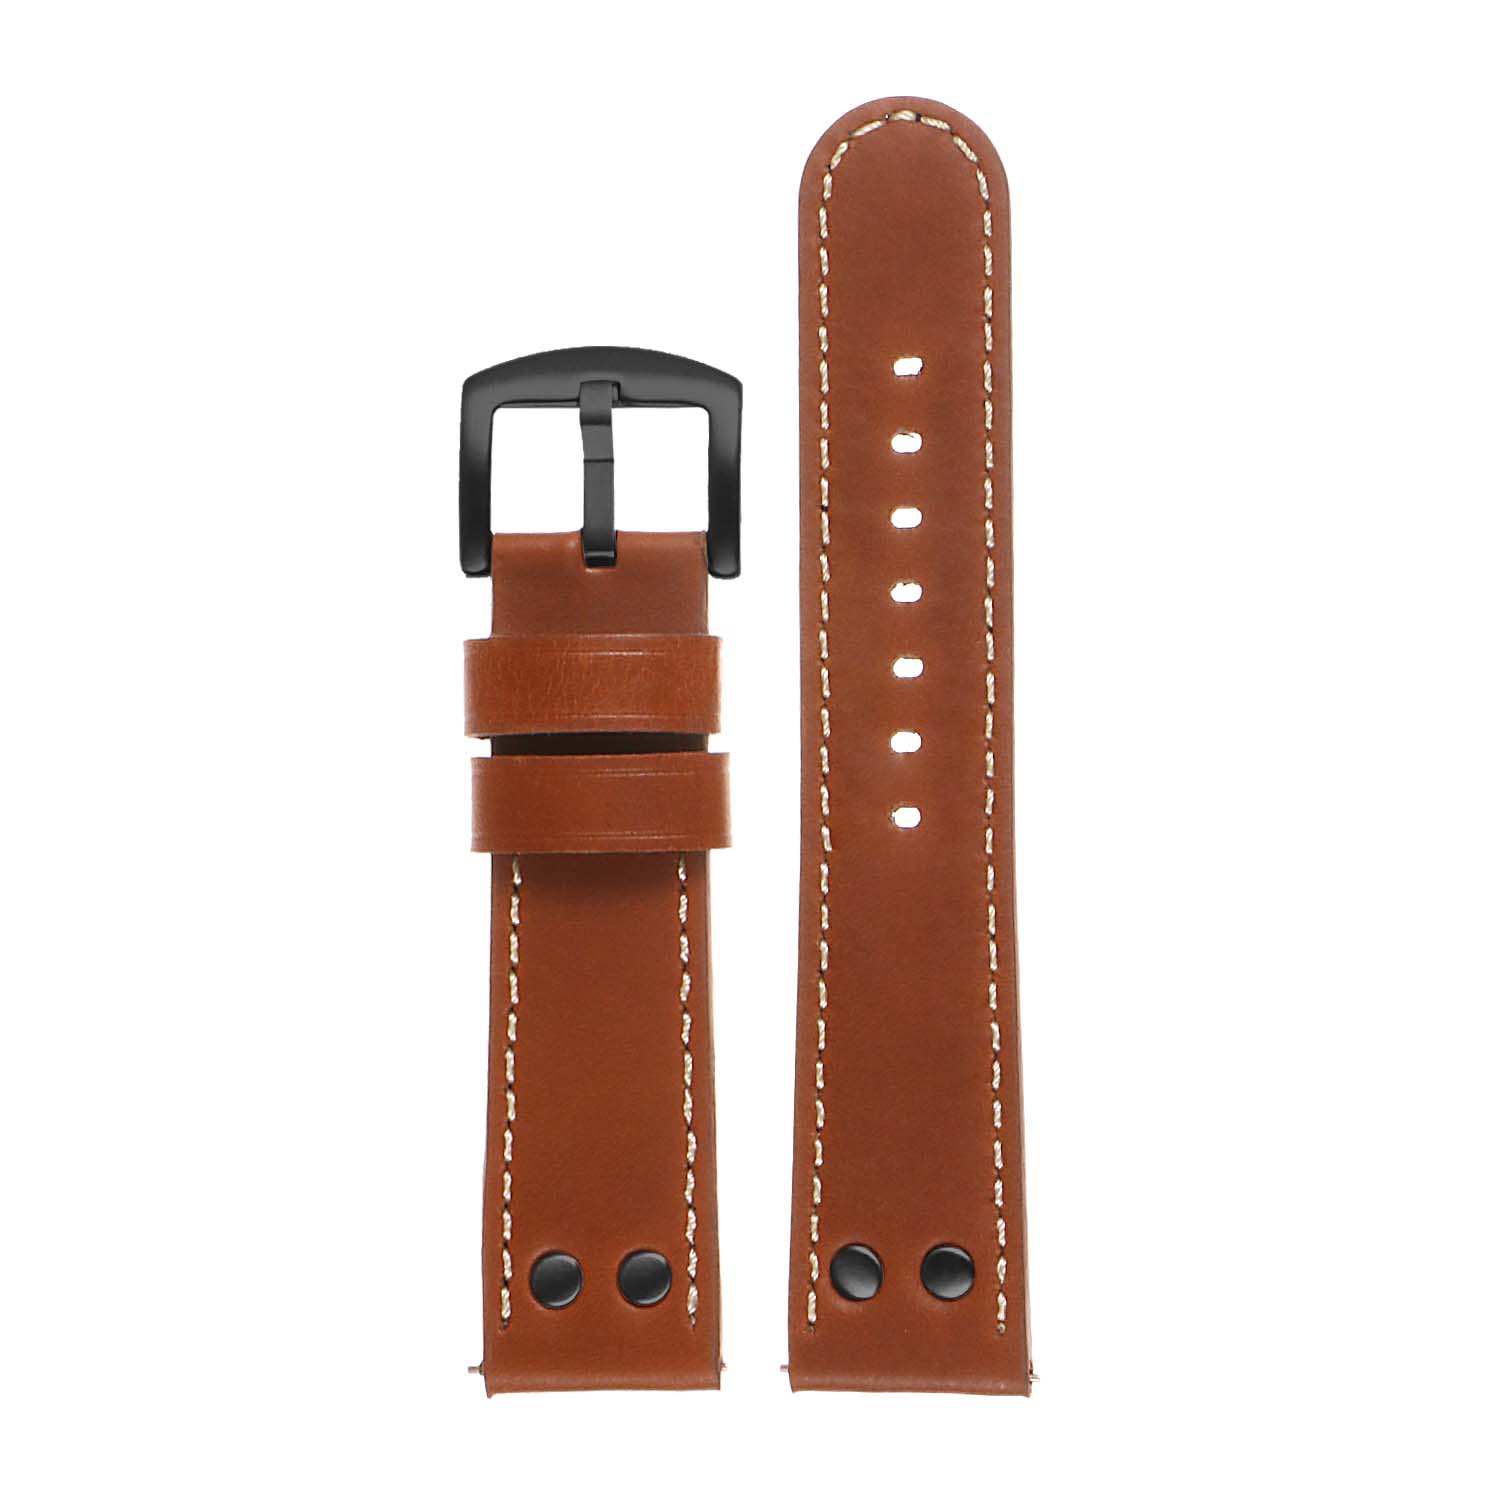 DASSARI Leather Pilot 22mm Watch Band Strap for LG G Watch W100 - Tan (Black Buckle)